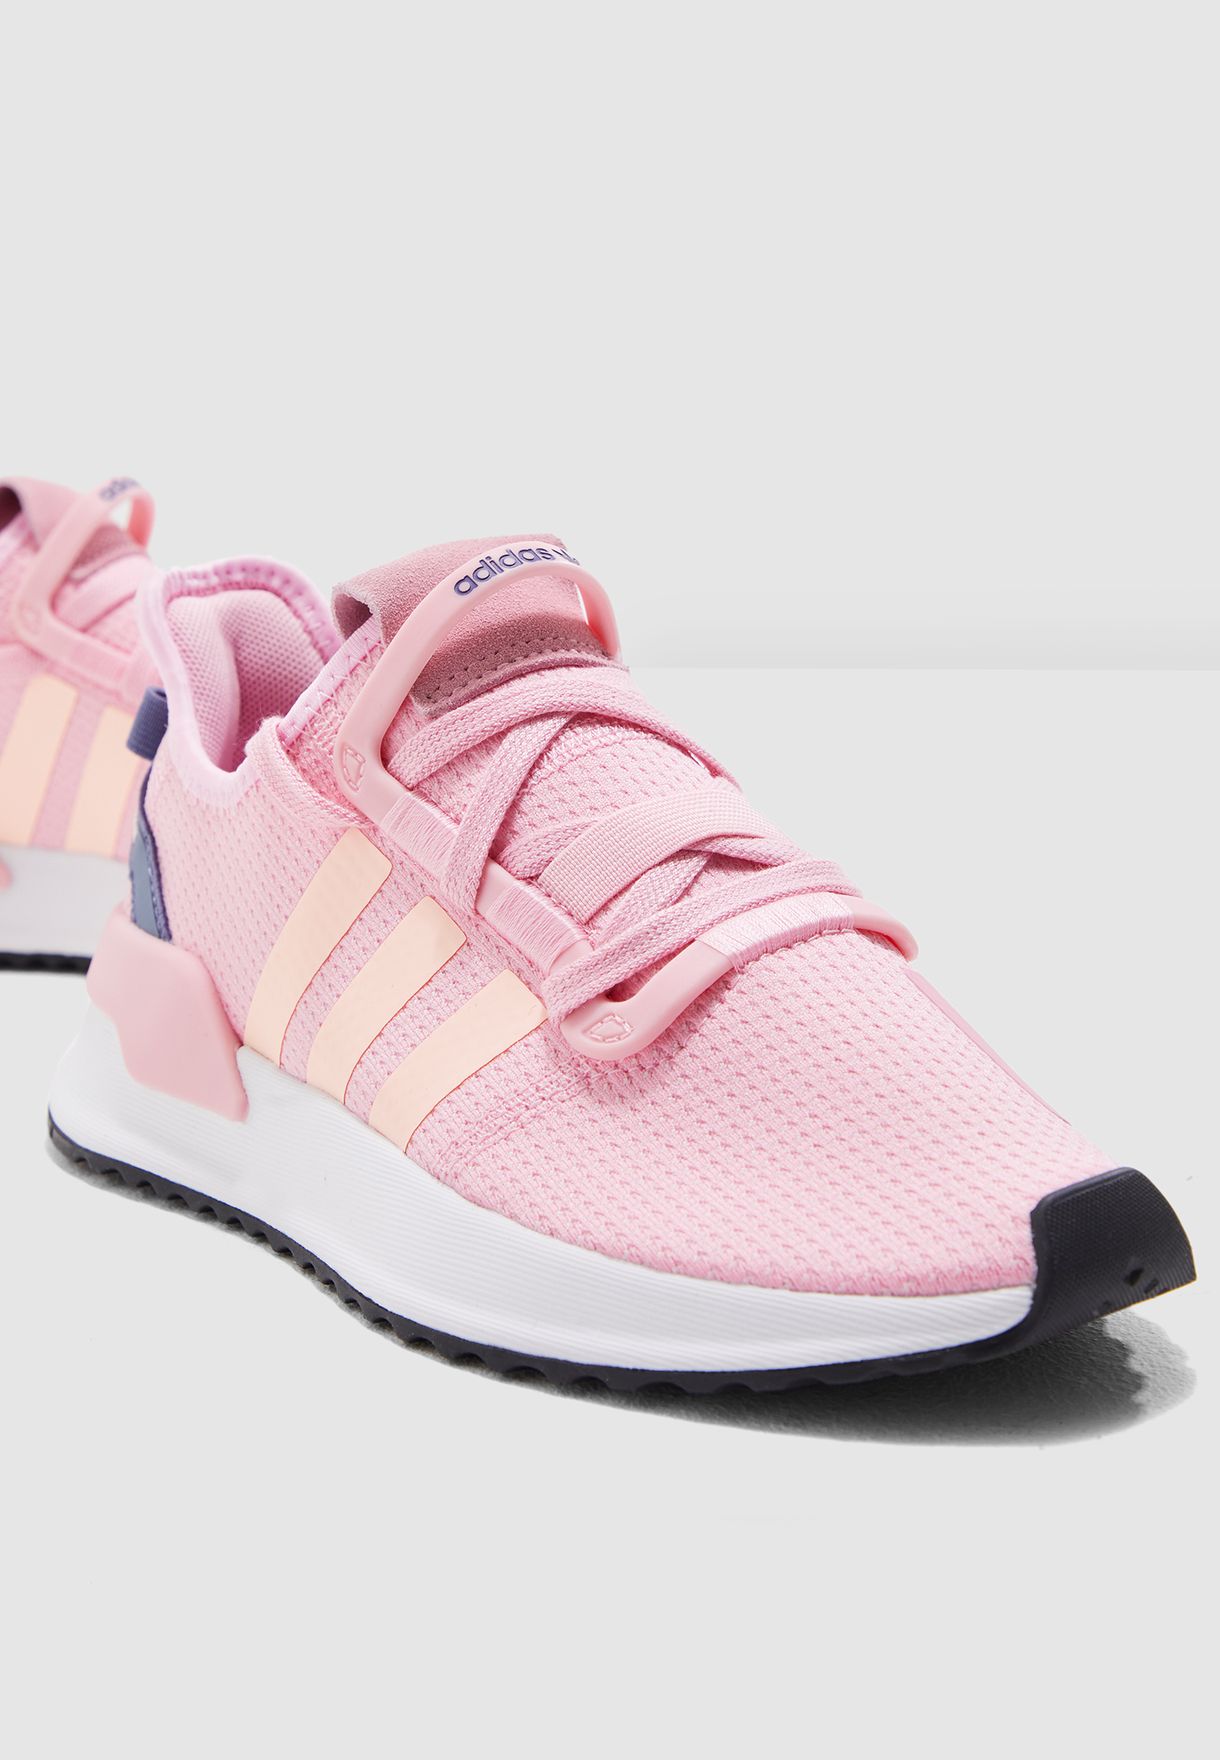 adidas u_path run shoes pink